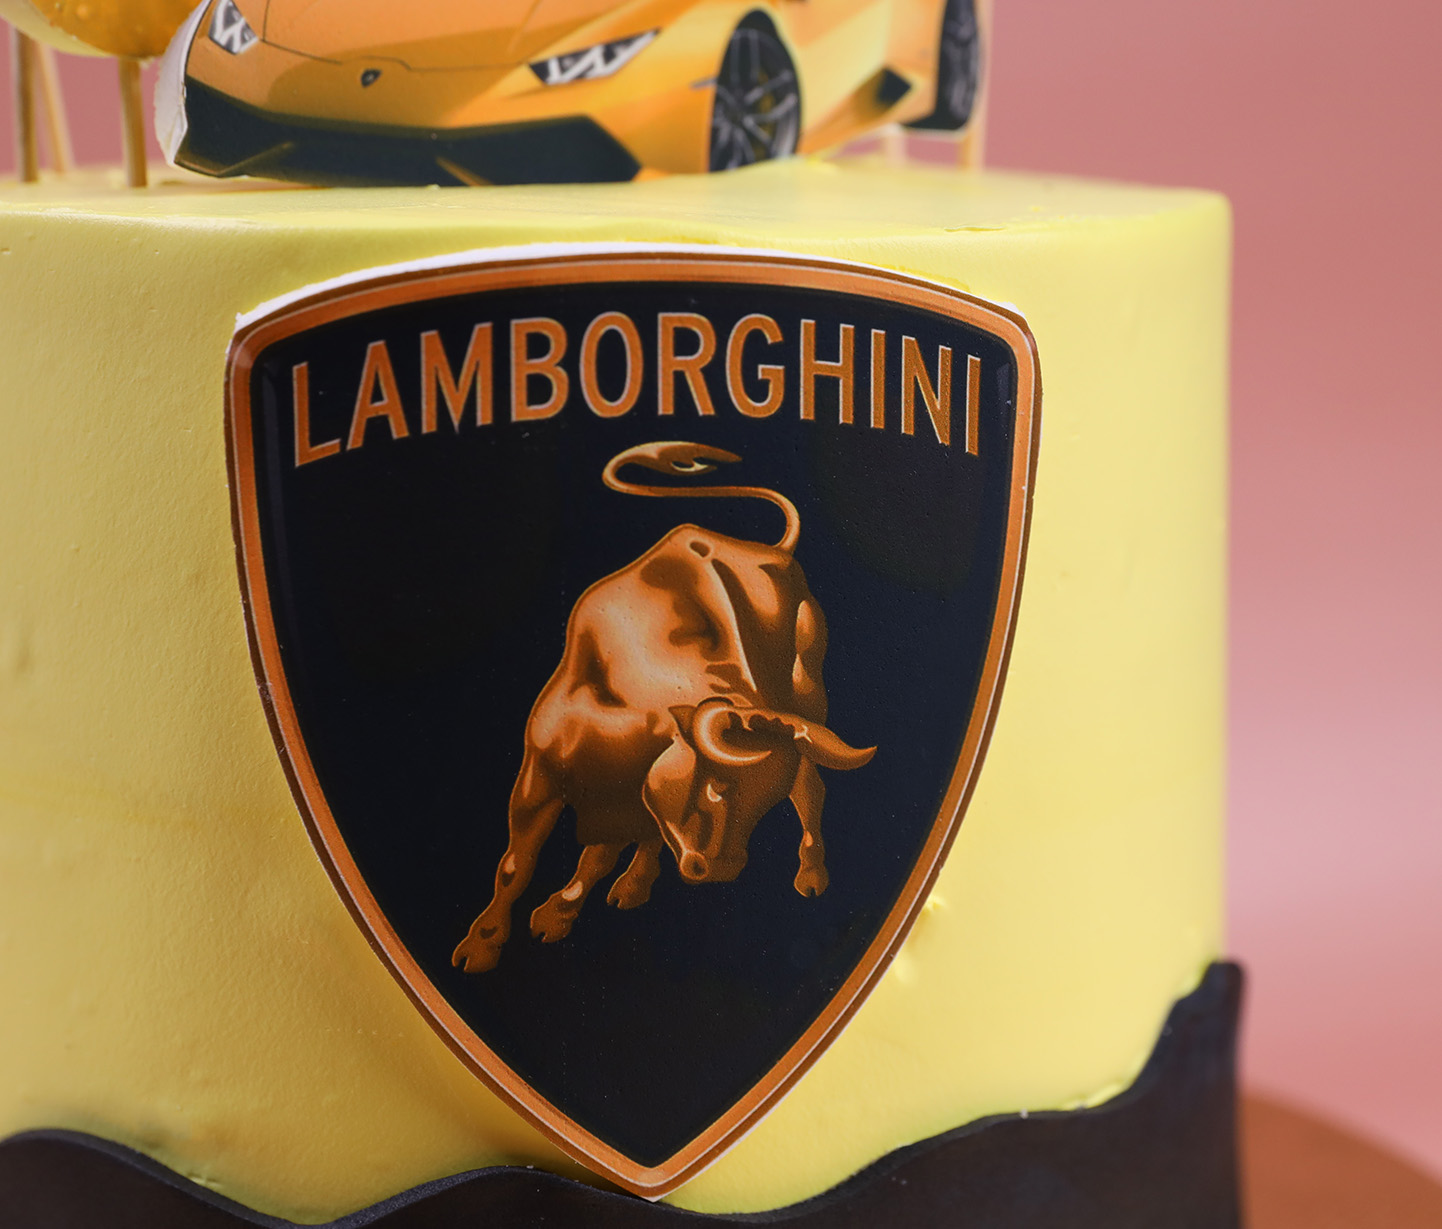 Carved car cake Lamborghini - Decorated Cake by Mother - CakesDecor